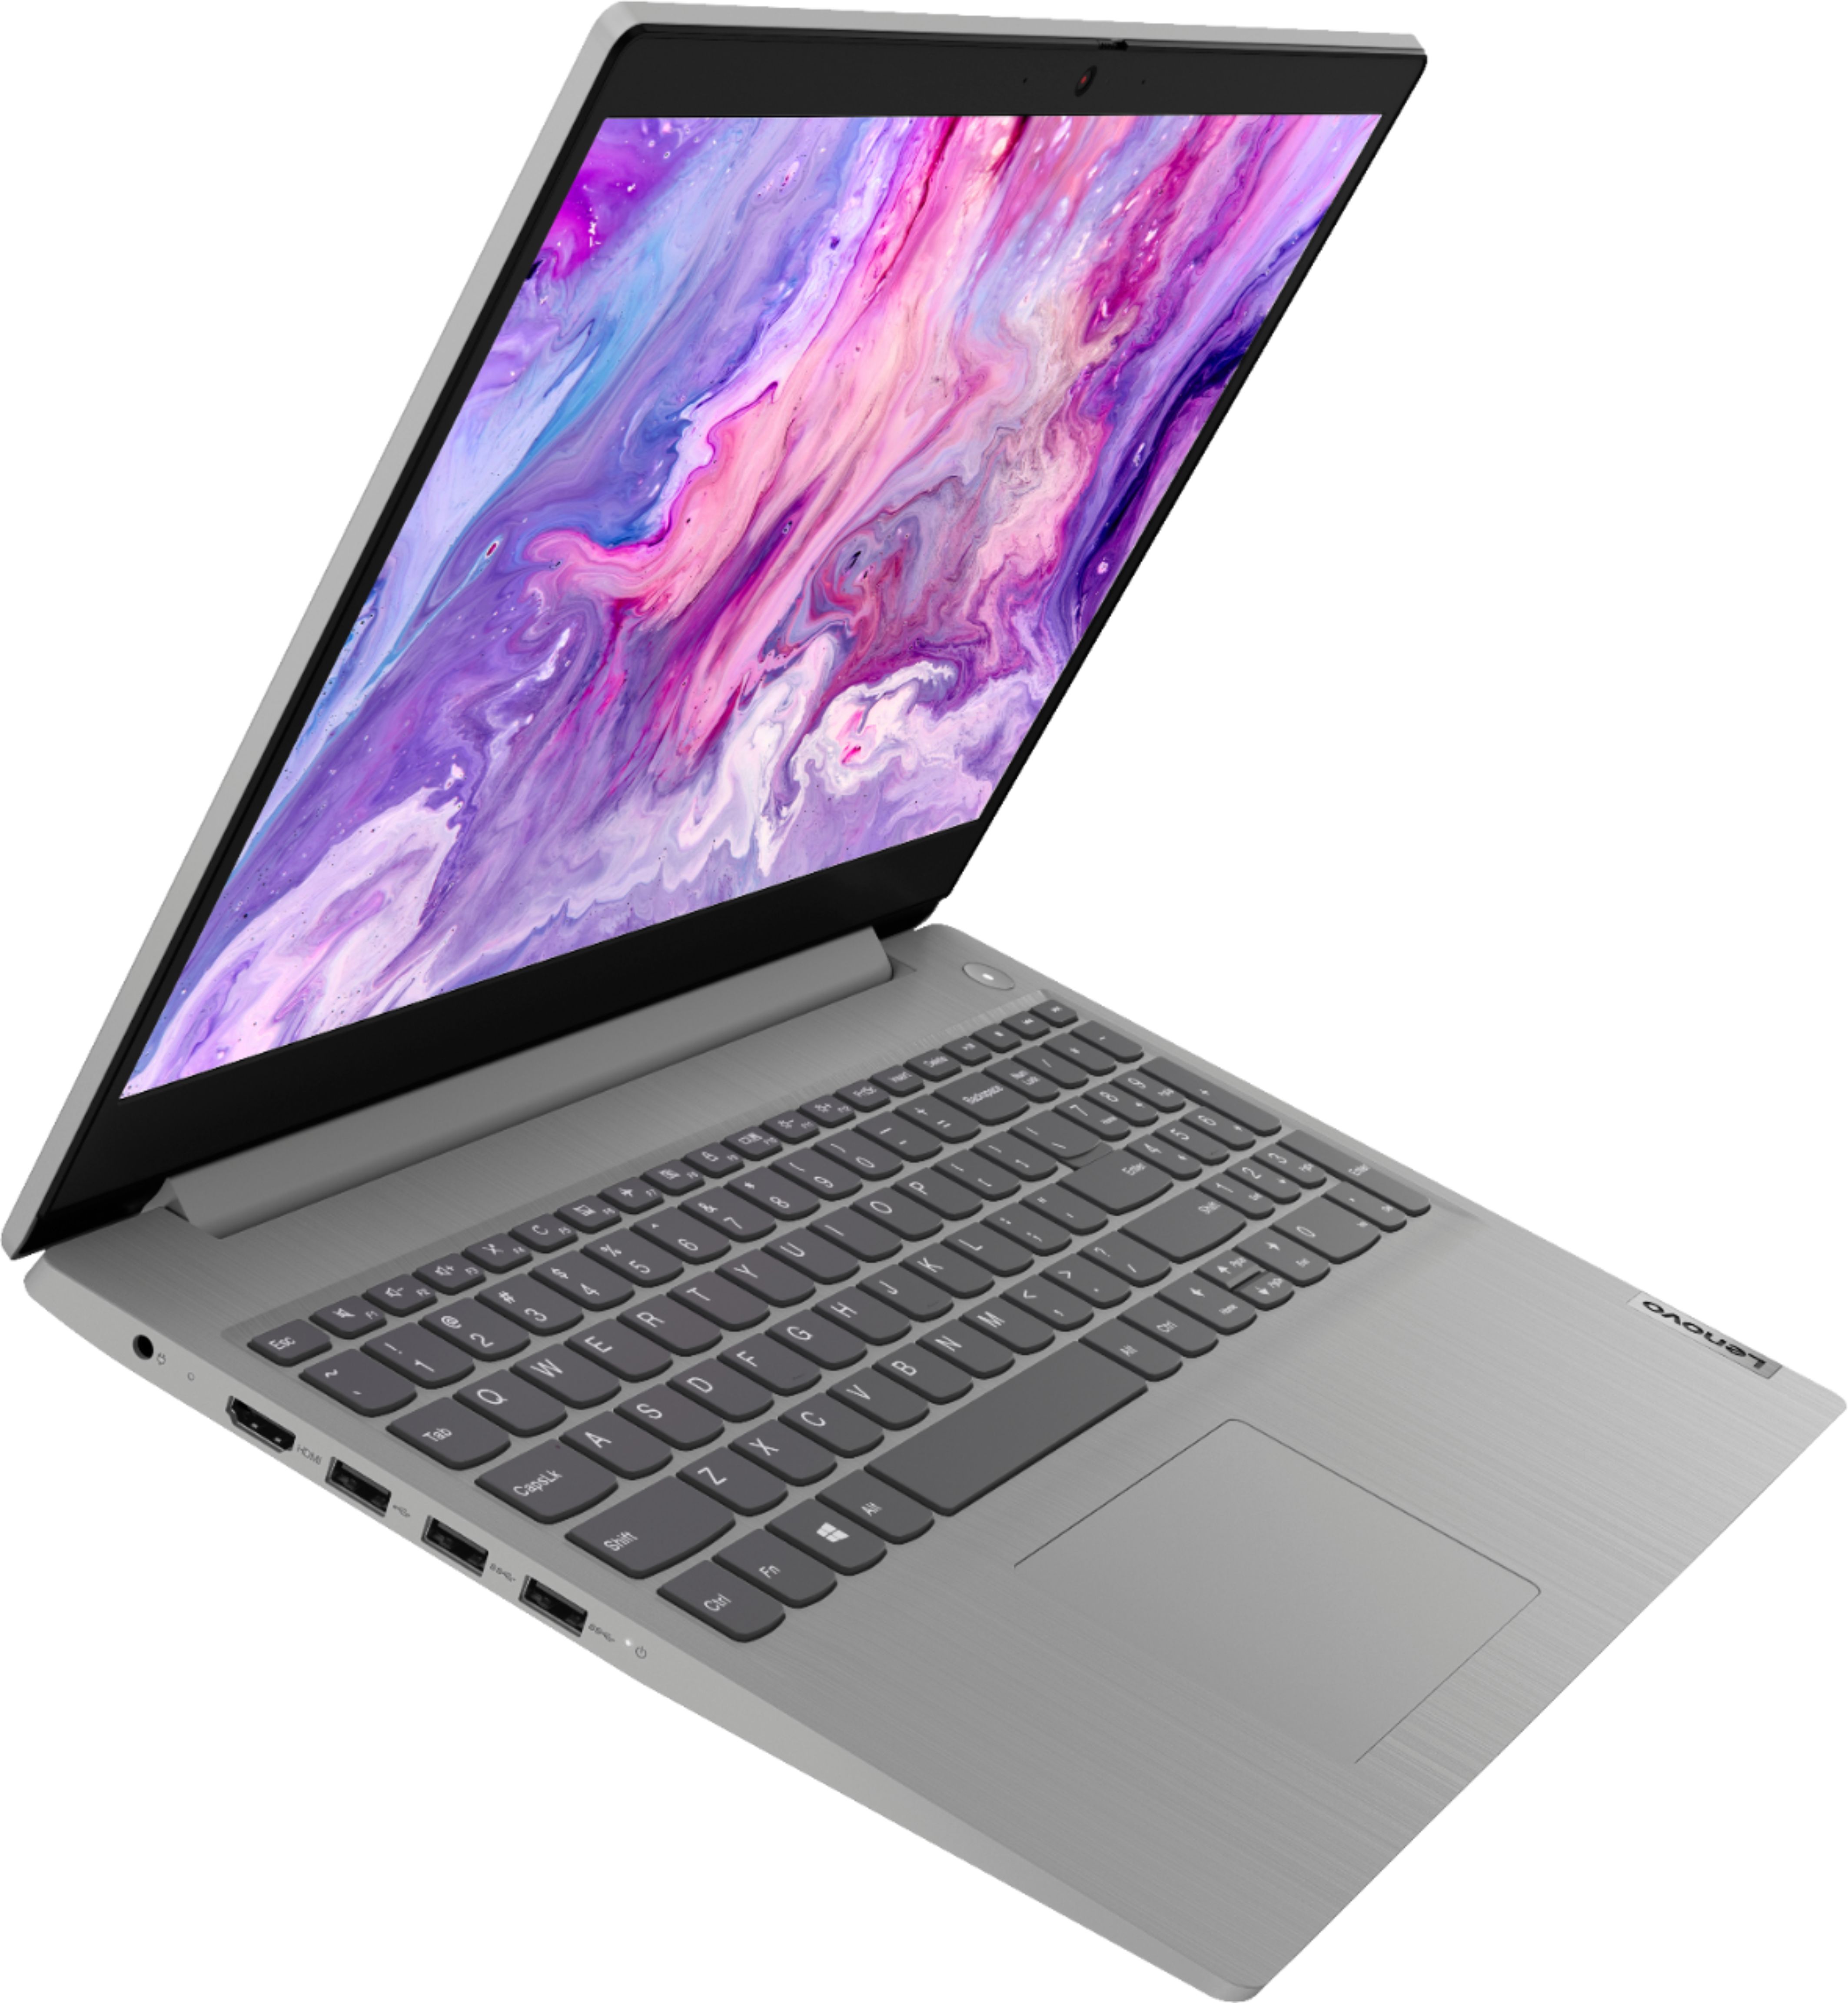 Angle View: Lenovo - Ideapad 3 15 15.6" Laptop - AMD Ryzen 3 - 8GB Memory - 128GB SSD - Platinum Grey